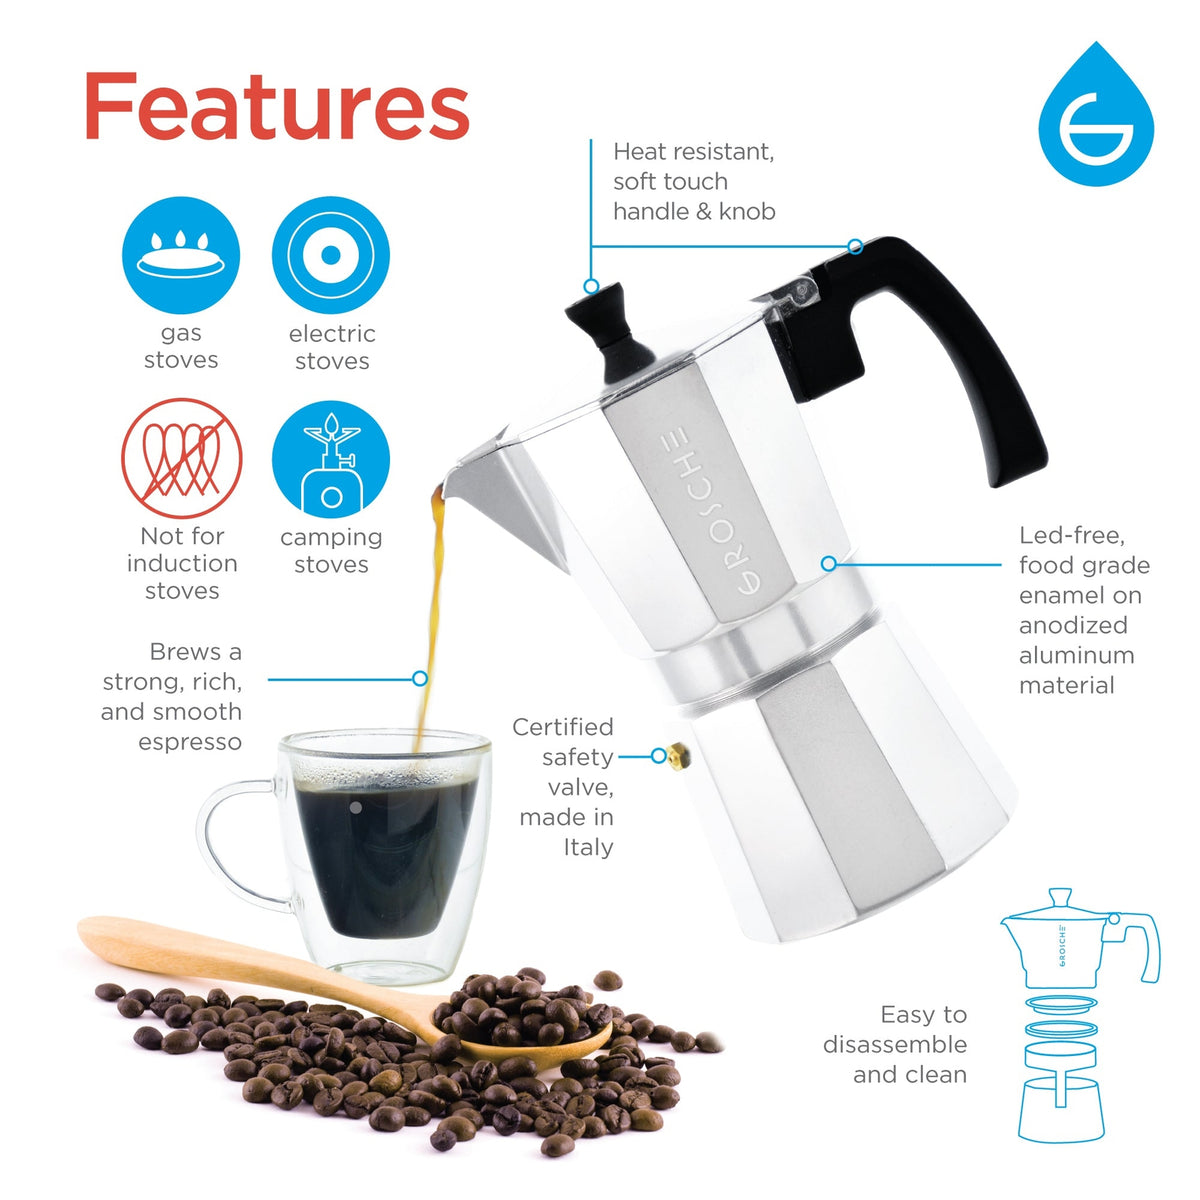 3 Cup Stovetop Espresso Maker, Moka Pot, Italian Coffee Maker